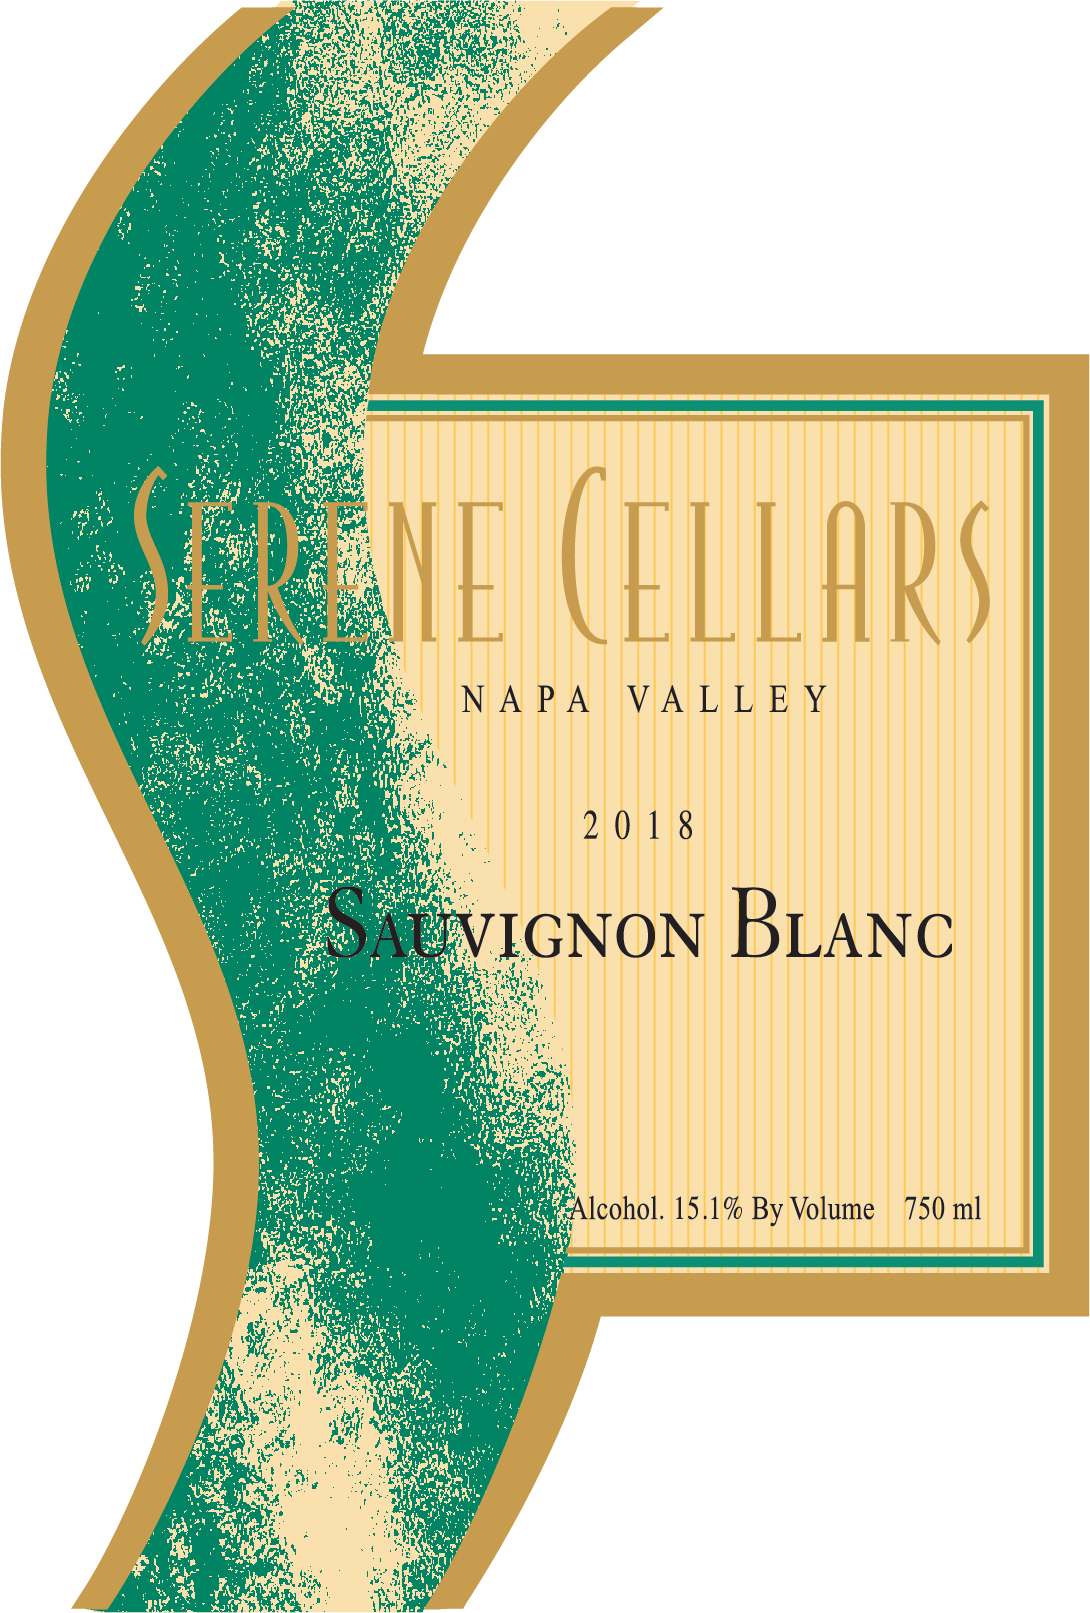 Product Image for 2018 Napa Valley Sauvignon Blanc "Insatiable"